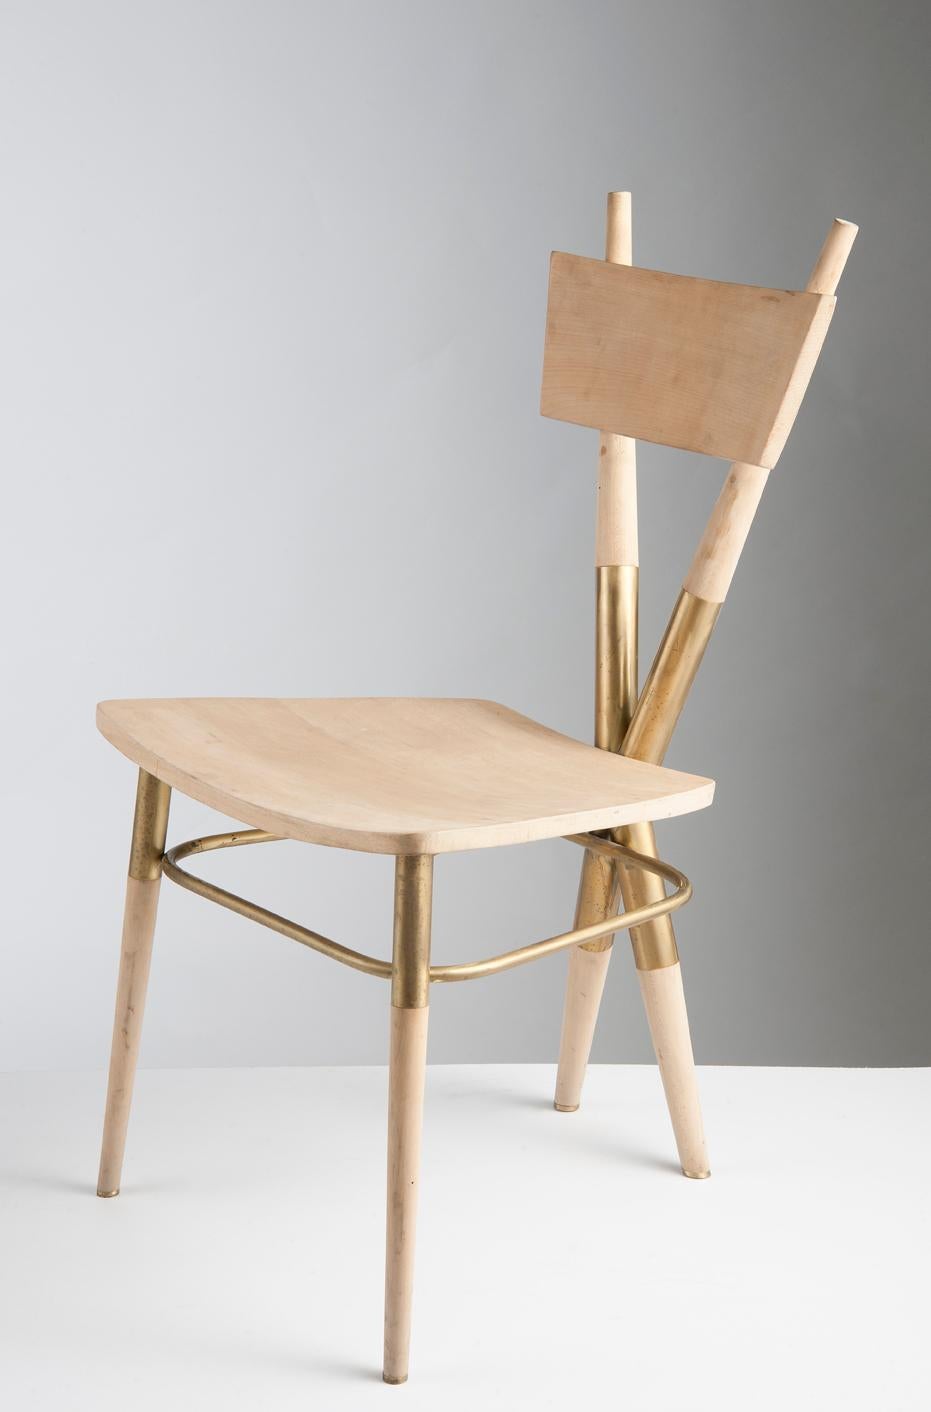 Turkish X Wooden Chair by Sema Topaloglu